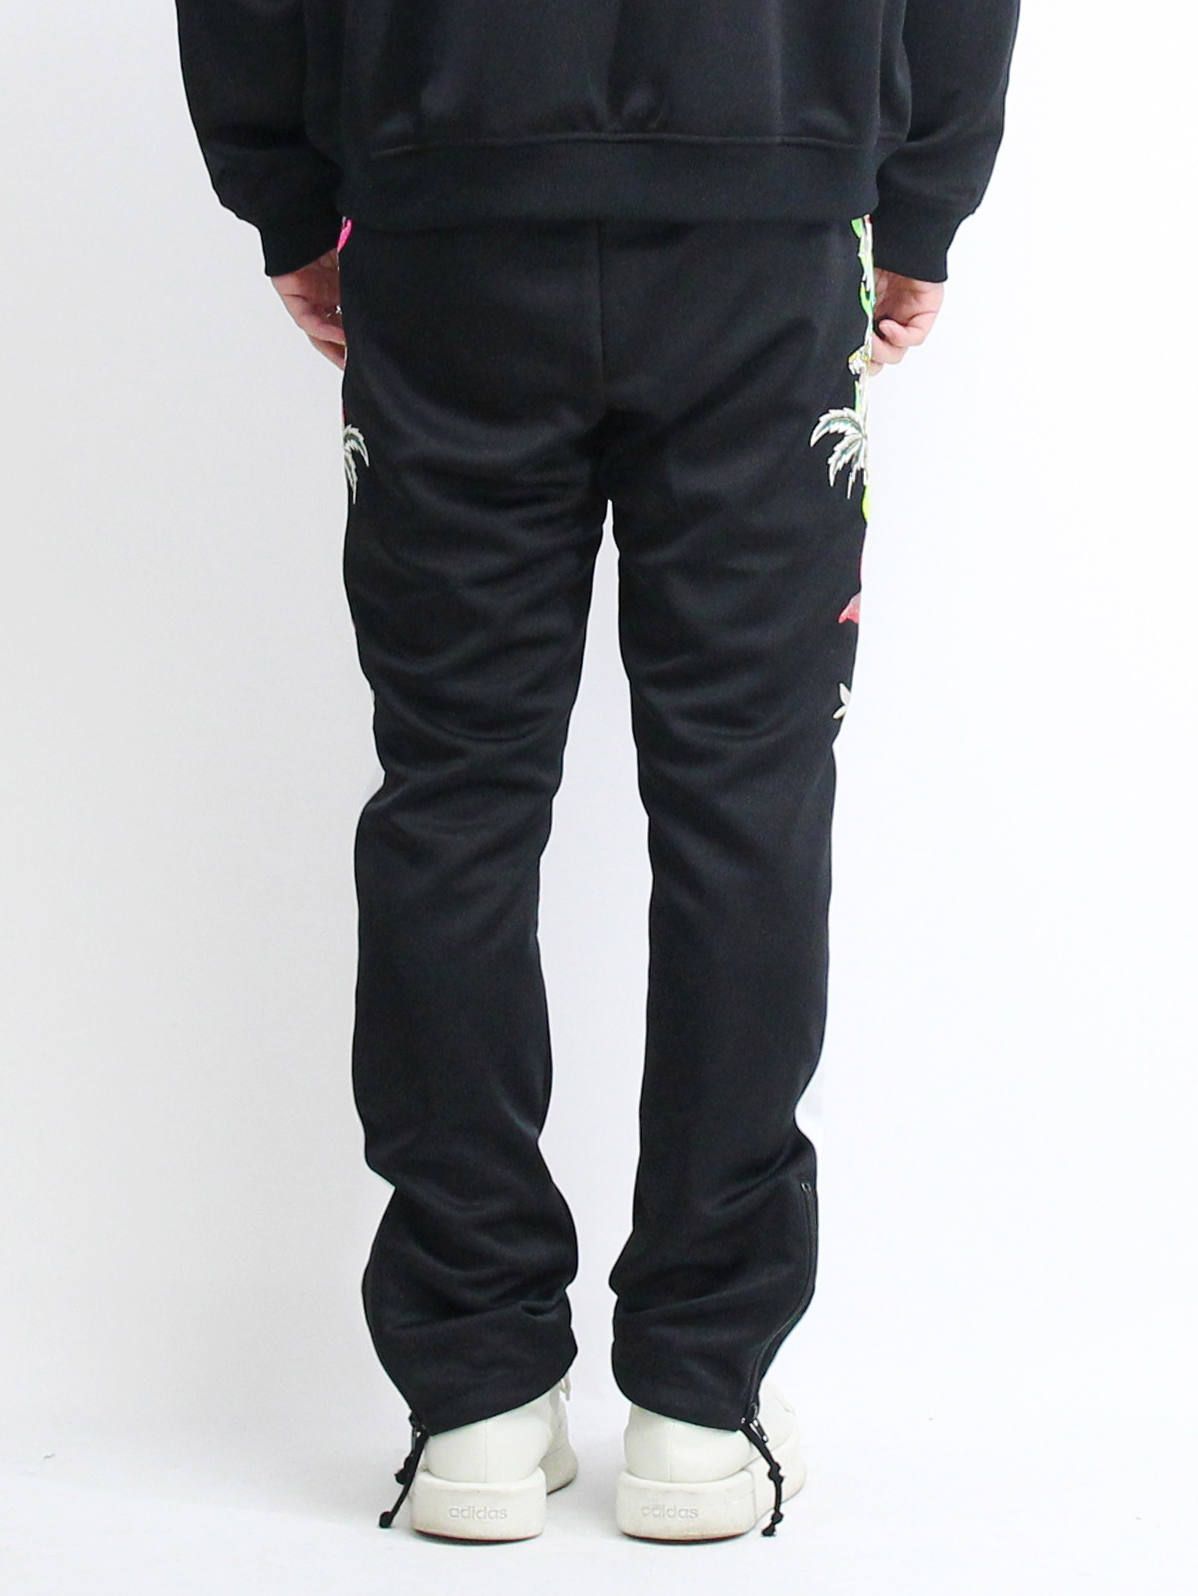 19SSカオス刺繍トラックパンツ - CHAOS EMBROIDERY TRACK PANTS - BLACK - Black - S